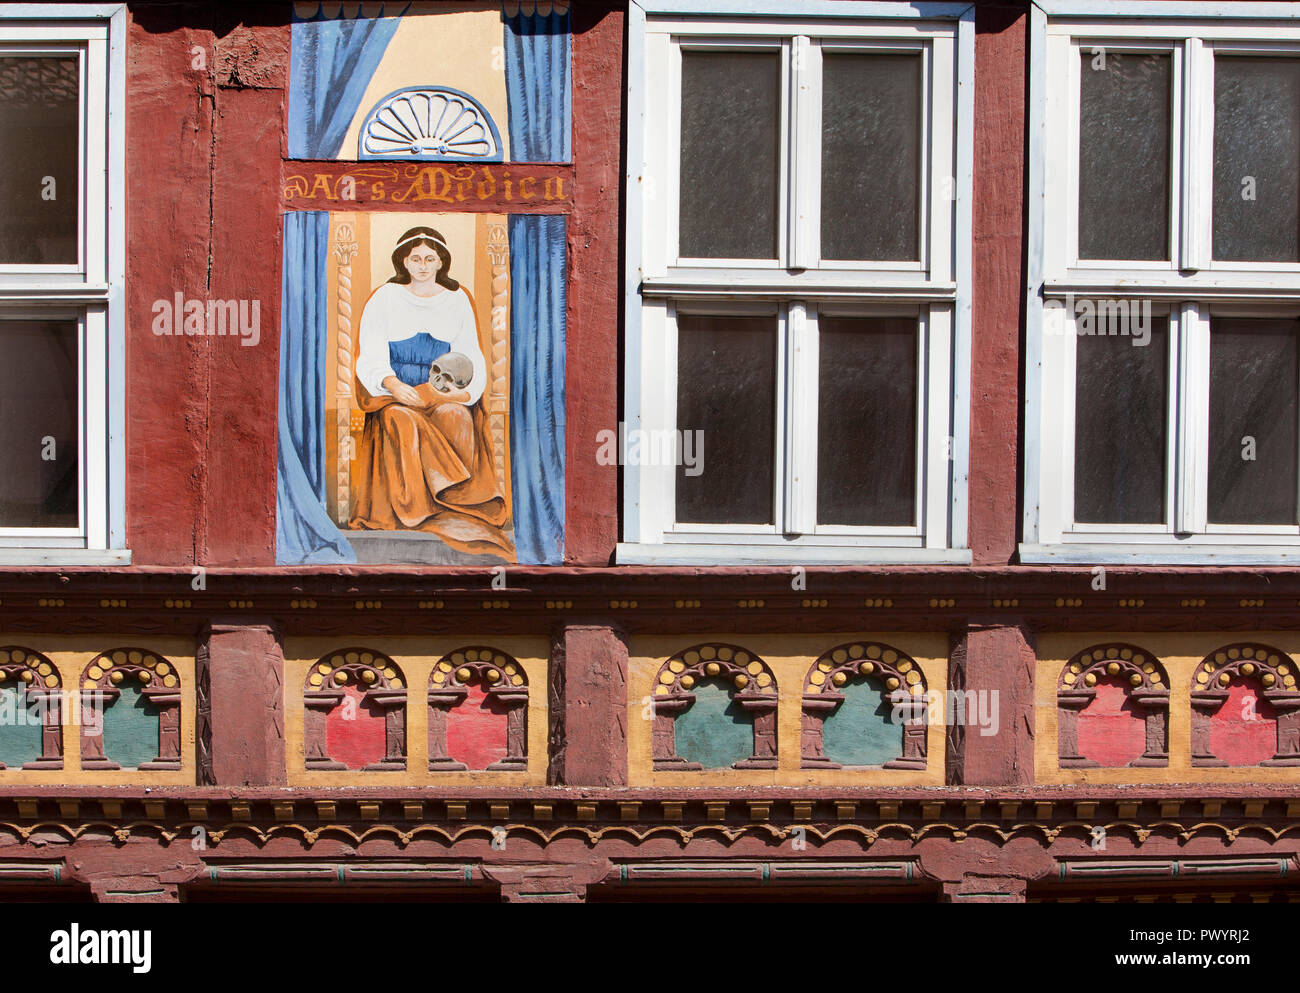 Peinture murale, Apothekenstreet, Duderstadt, Basse-Saxe, Allemagne, Europe Banque D'Images